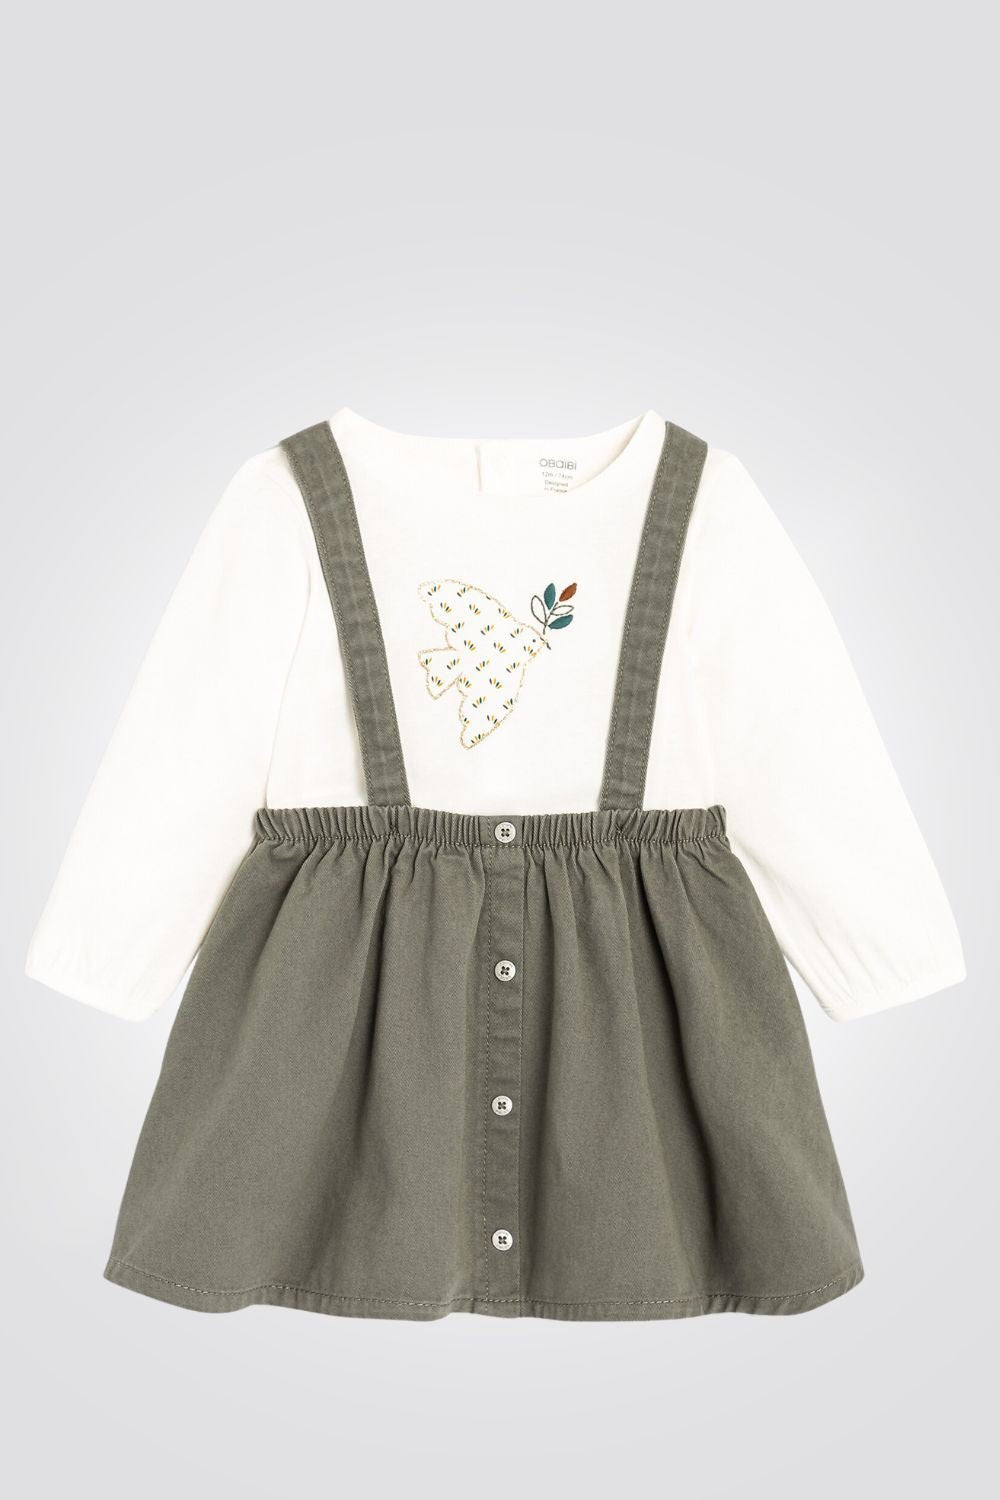 OBAIBI - סט שמלת תינוקות סארפן בצבע זית עם טישירט שרוול ארוך בצבע שמנת - MASHBIR//365